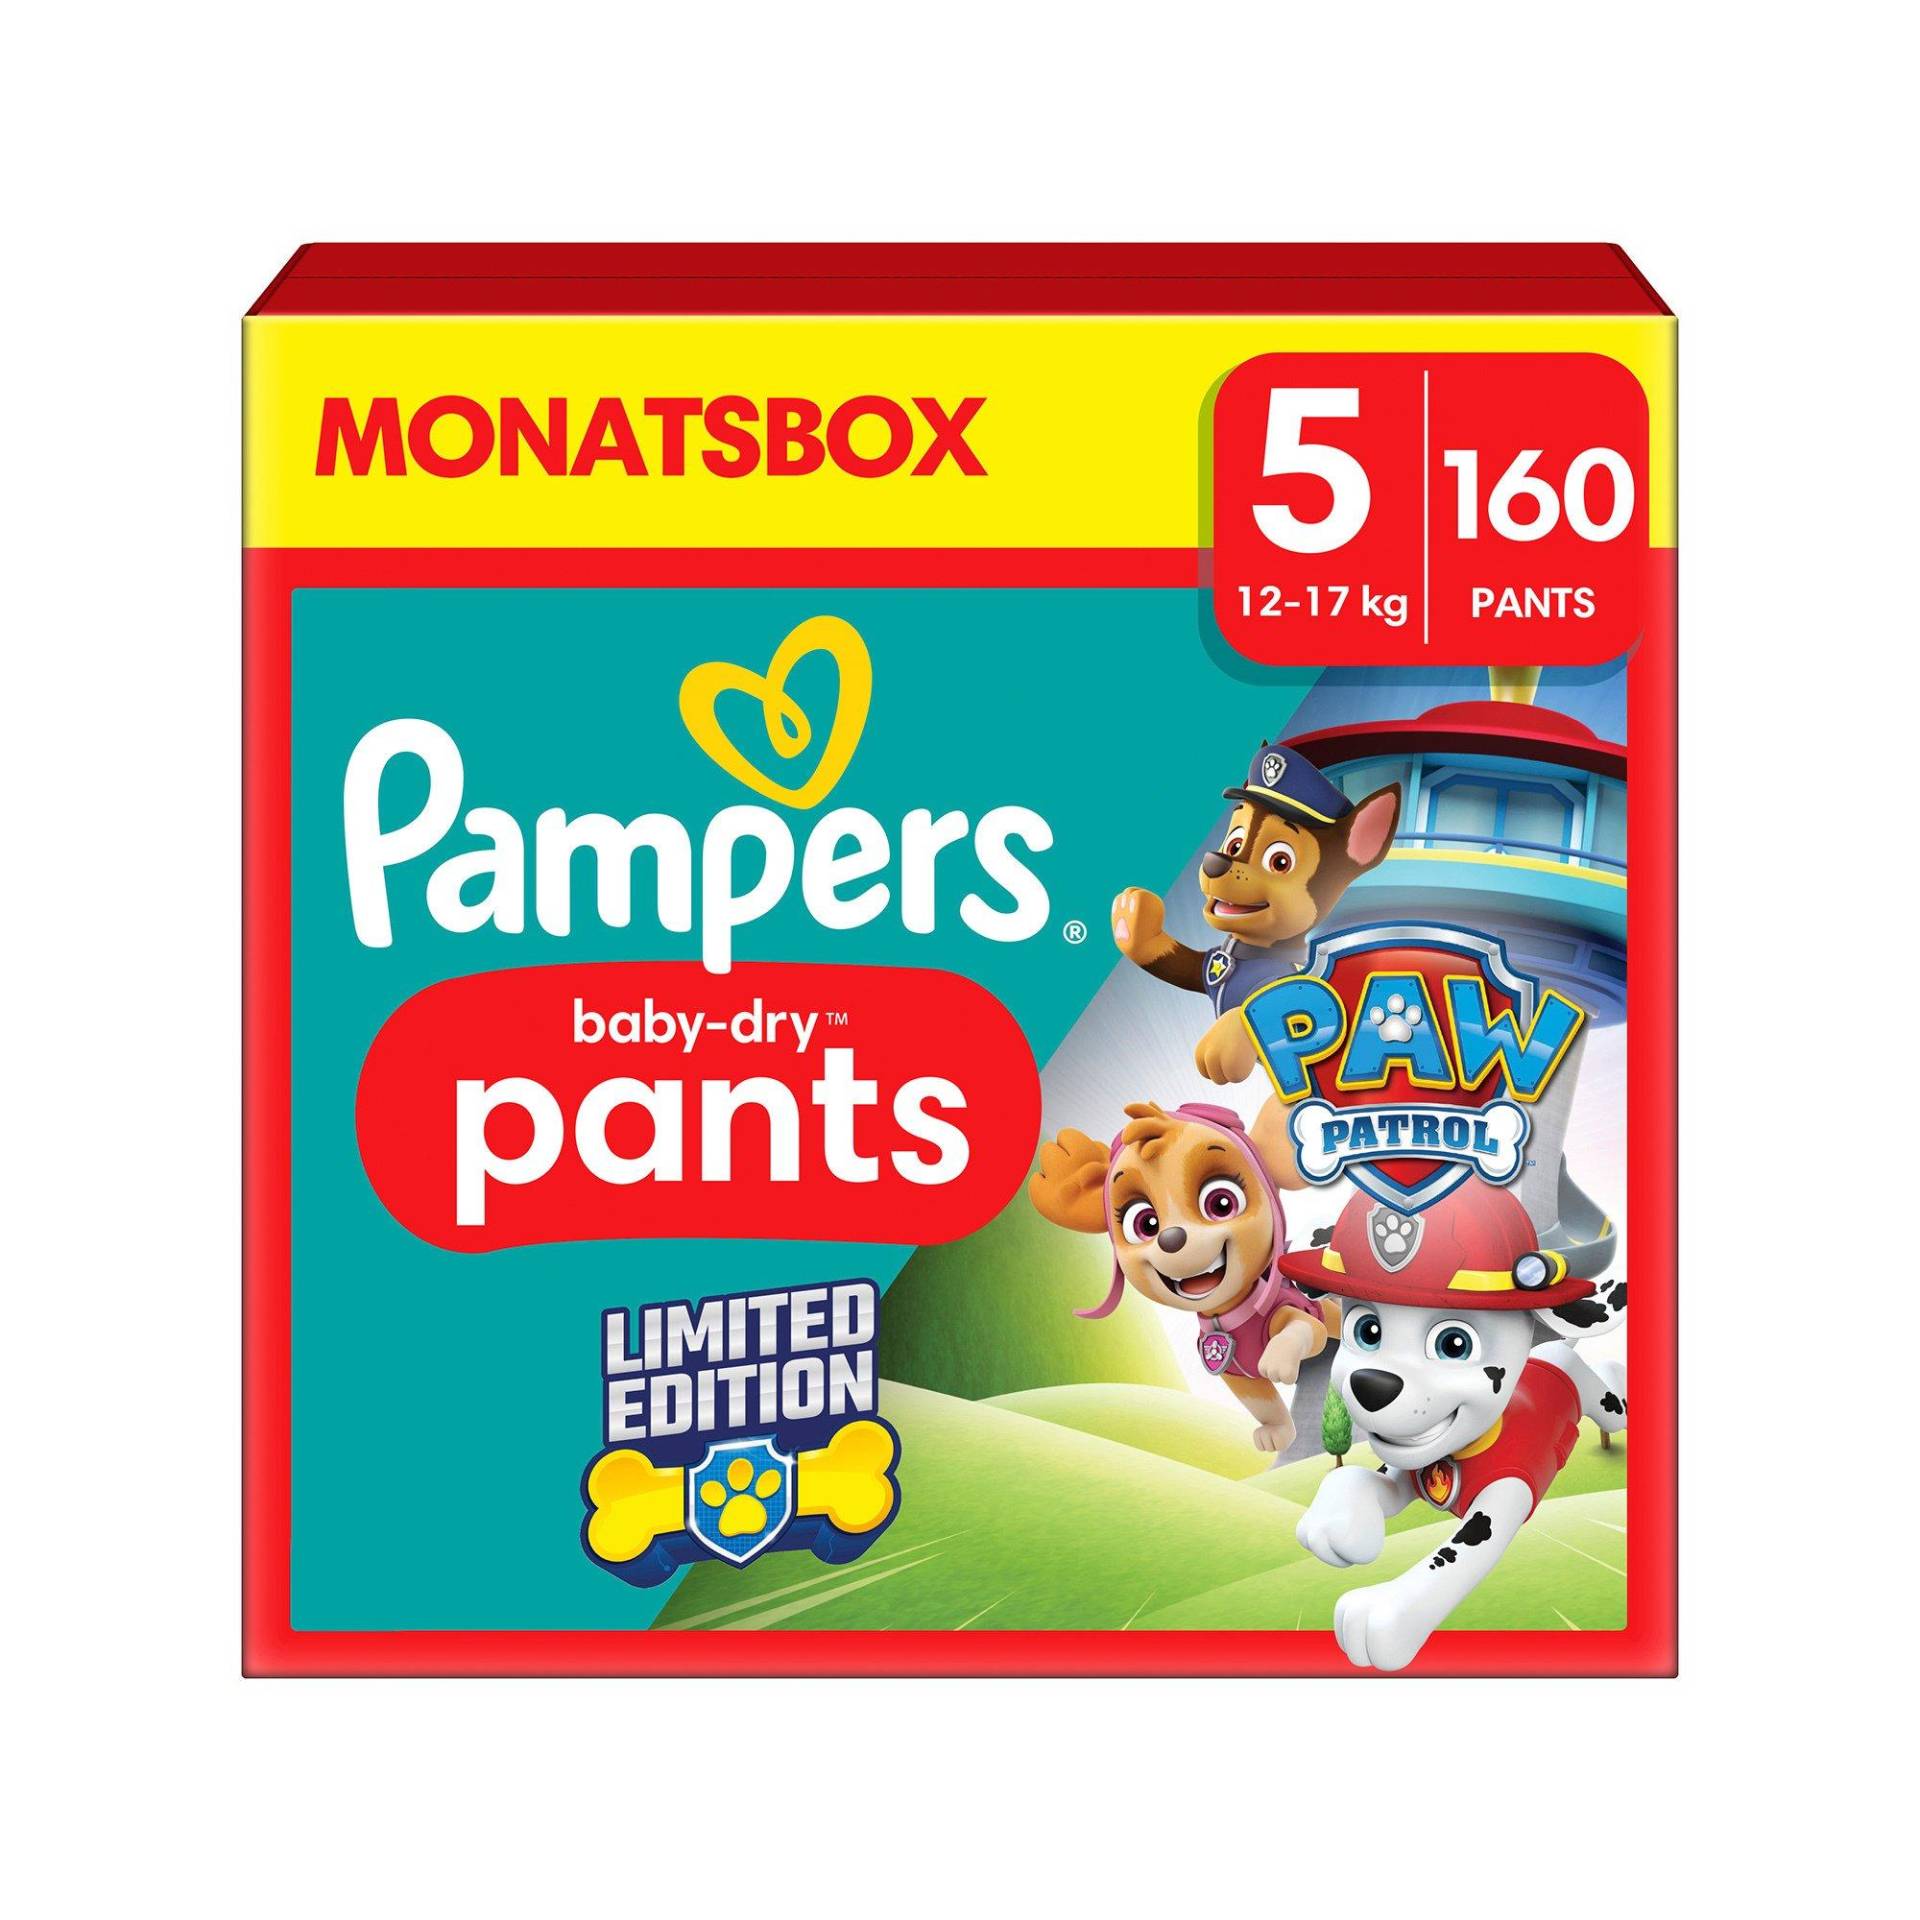 Baby-dry Pants Paw Patrol Limited Edition, Grösse 5 Damen  160STK von Pampers